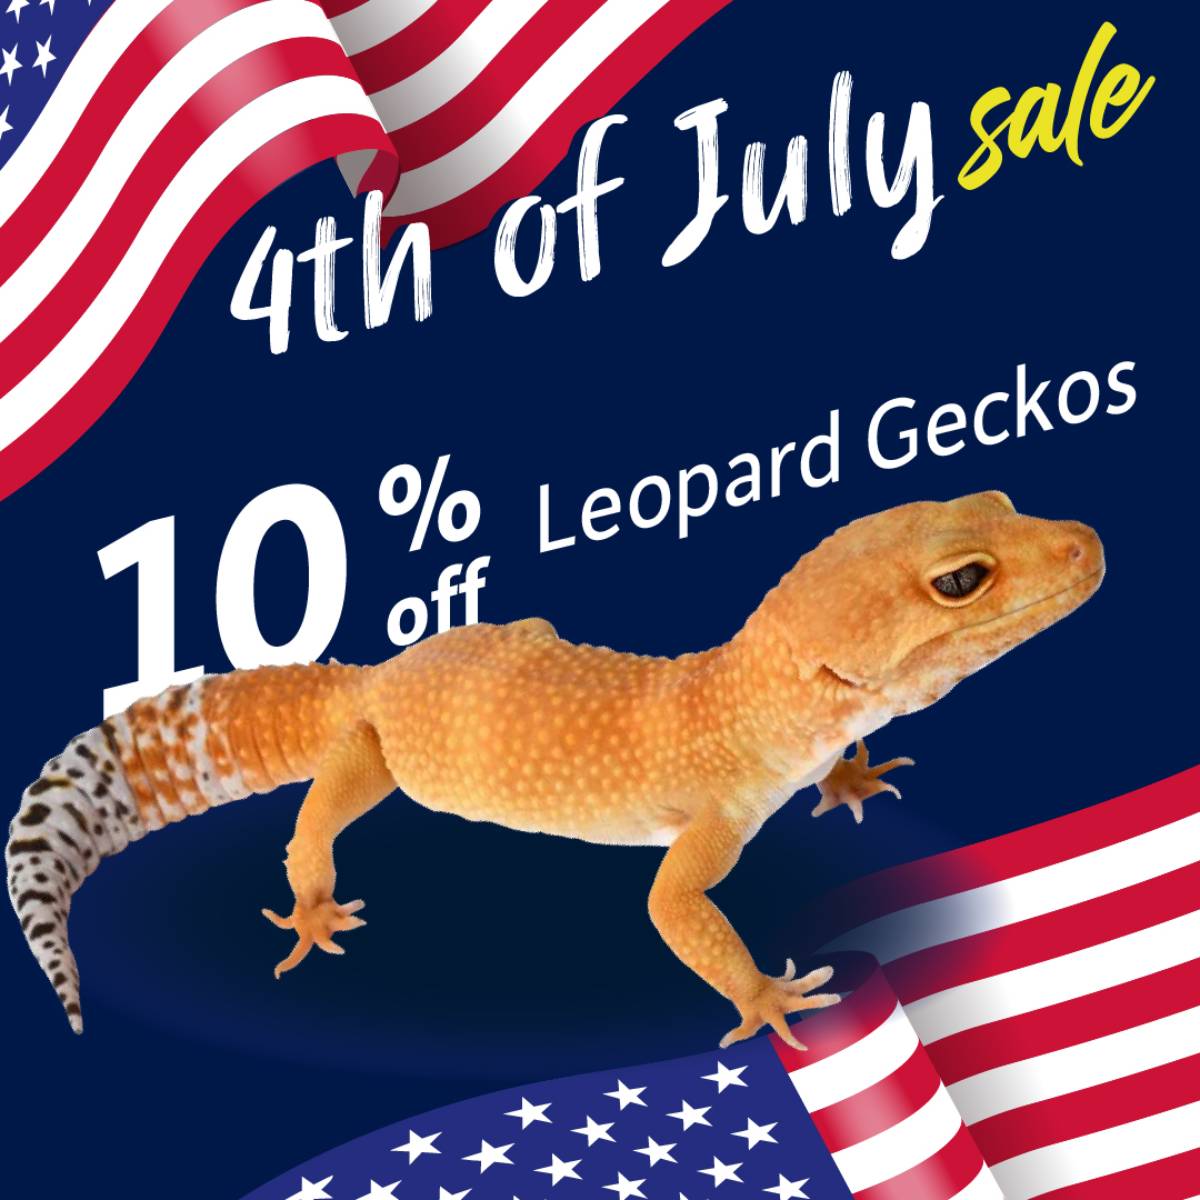 Save 10% on leopard geckos.